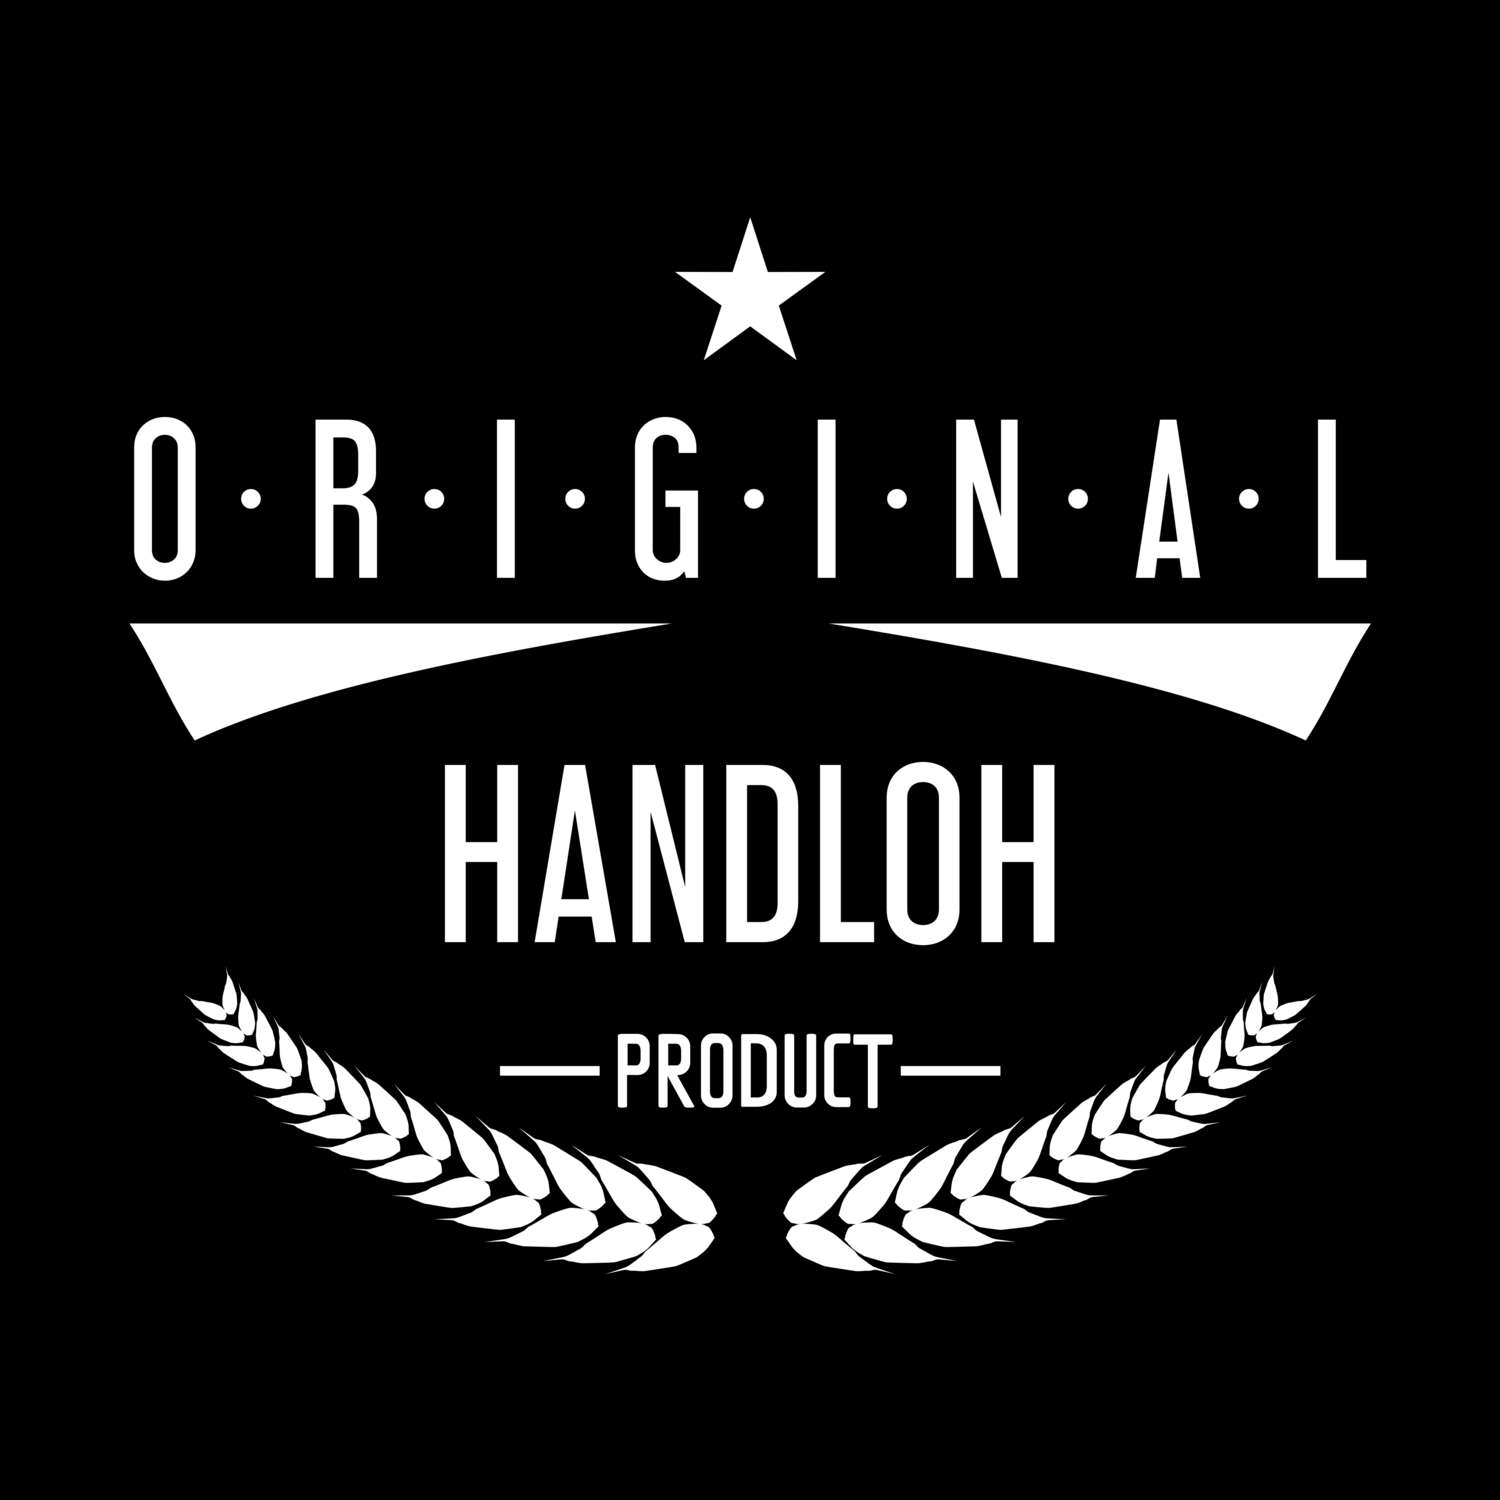 Handloh T-Shirt »Original Product«